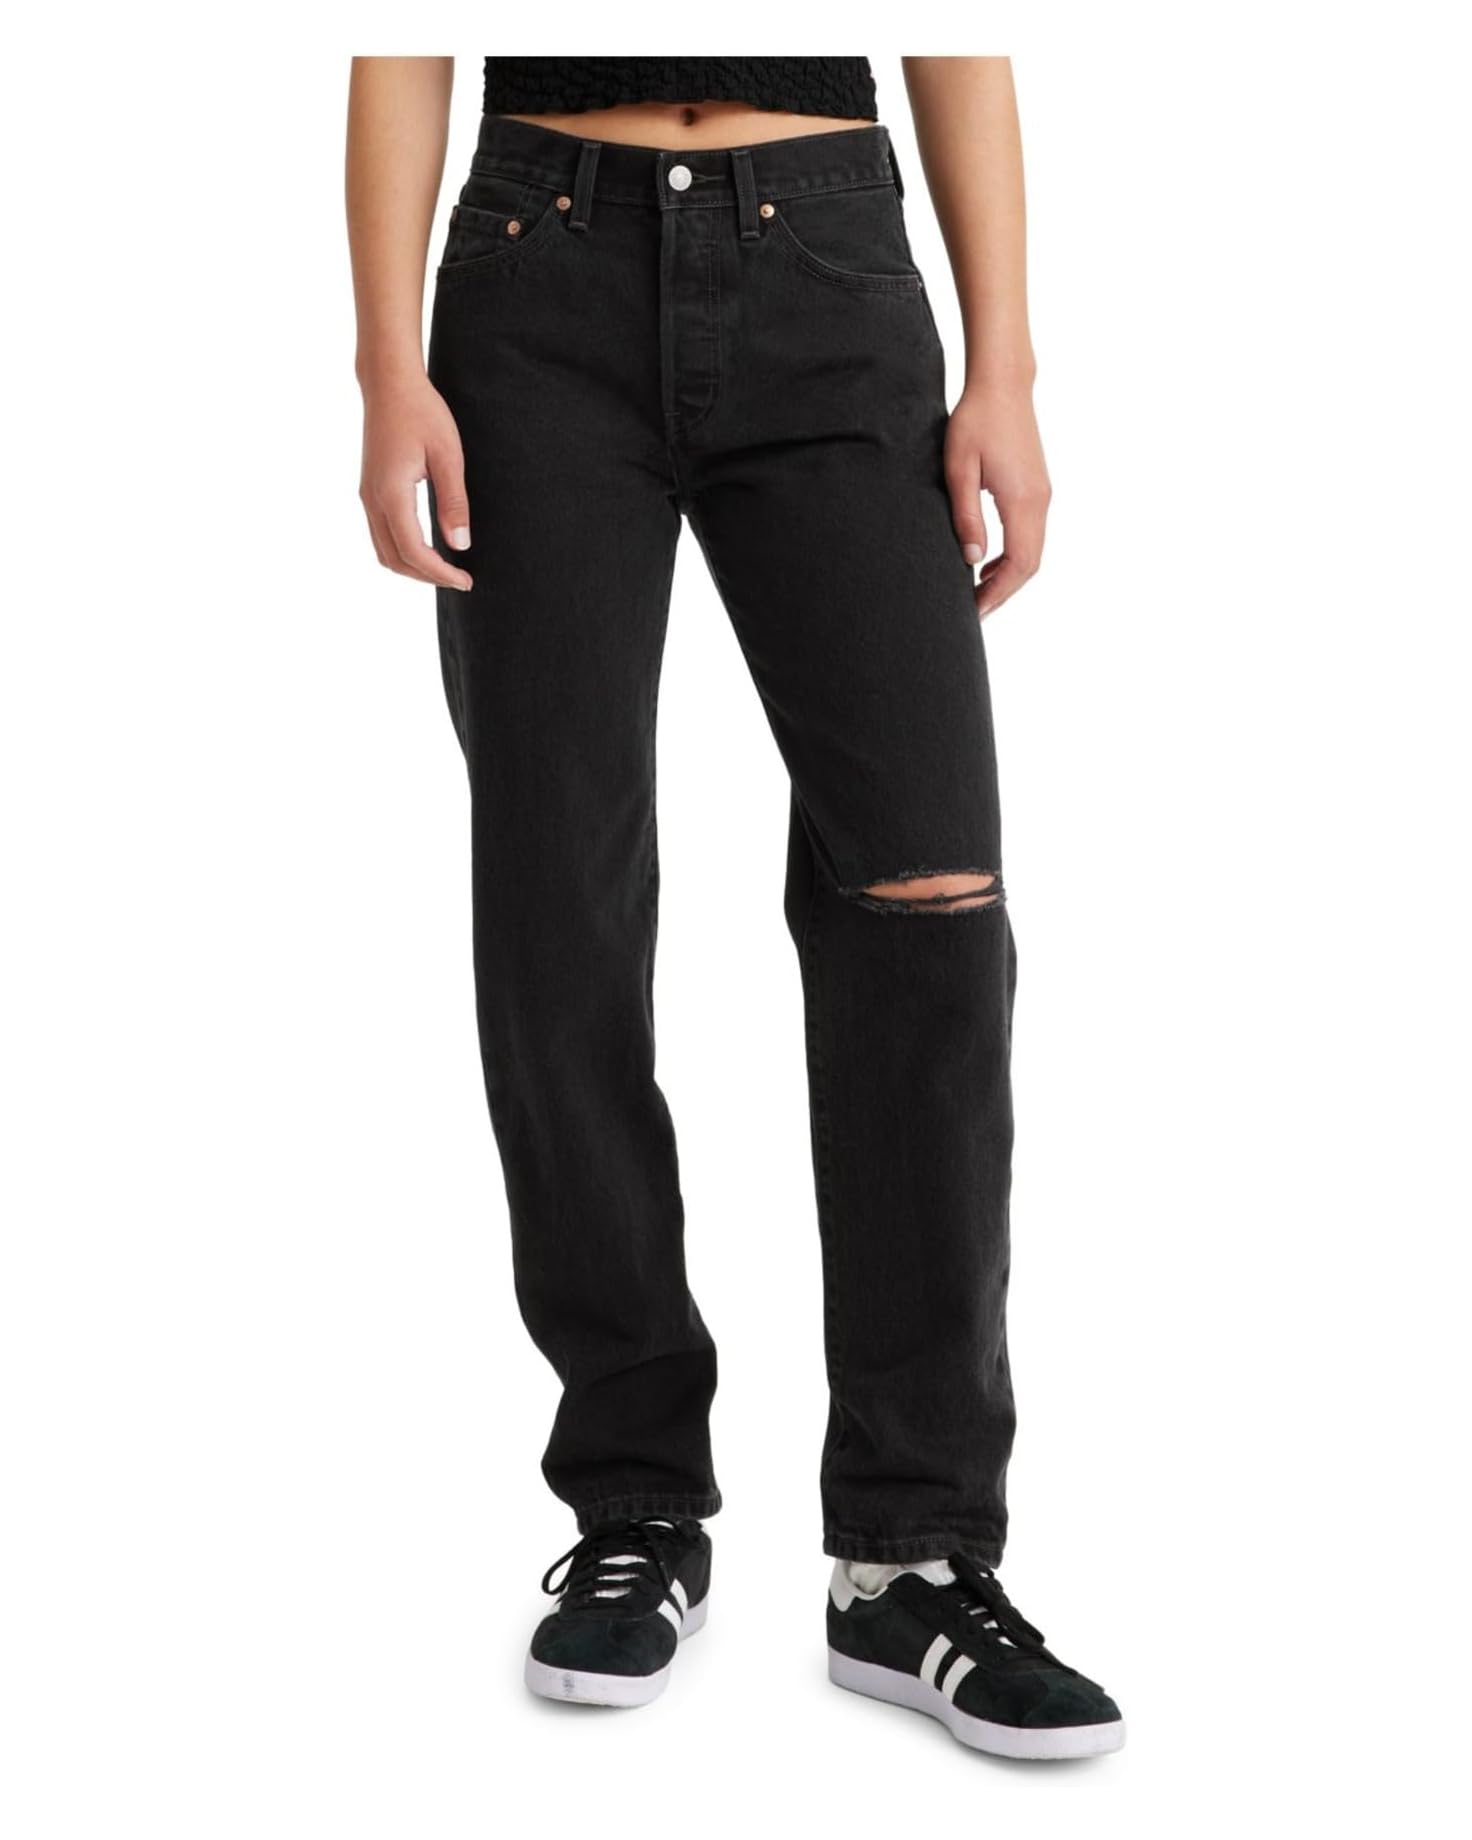 Levi's Premium Women's 501 '81 Jeans (Concrete Ice) $32.40 + Free Shipping